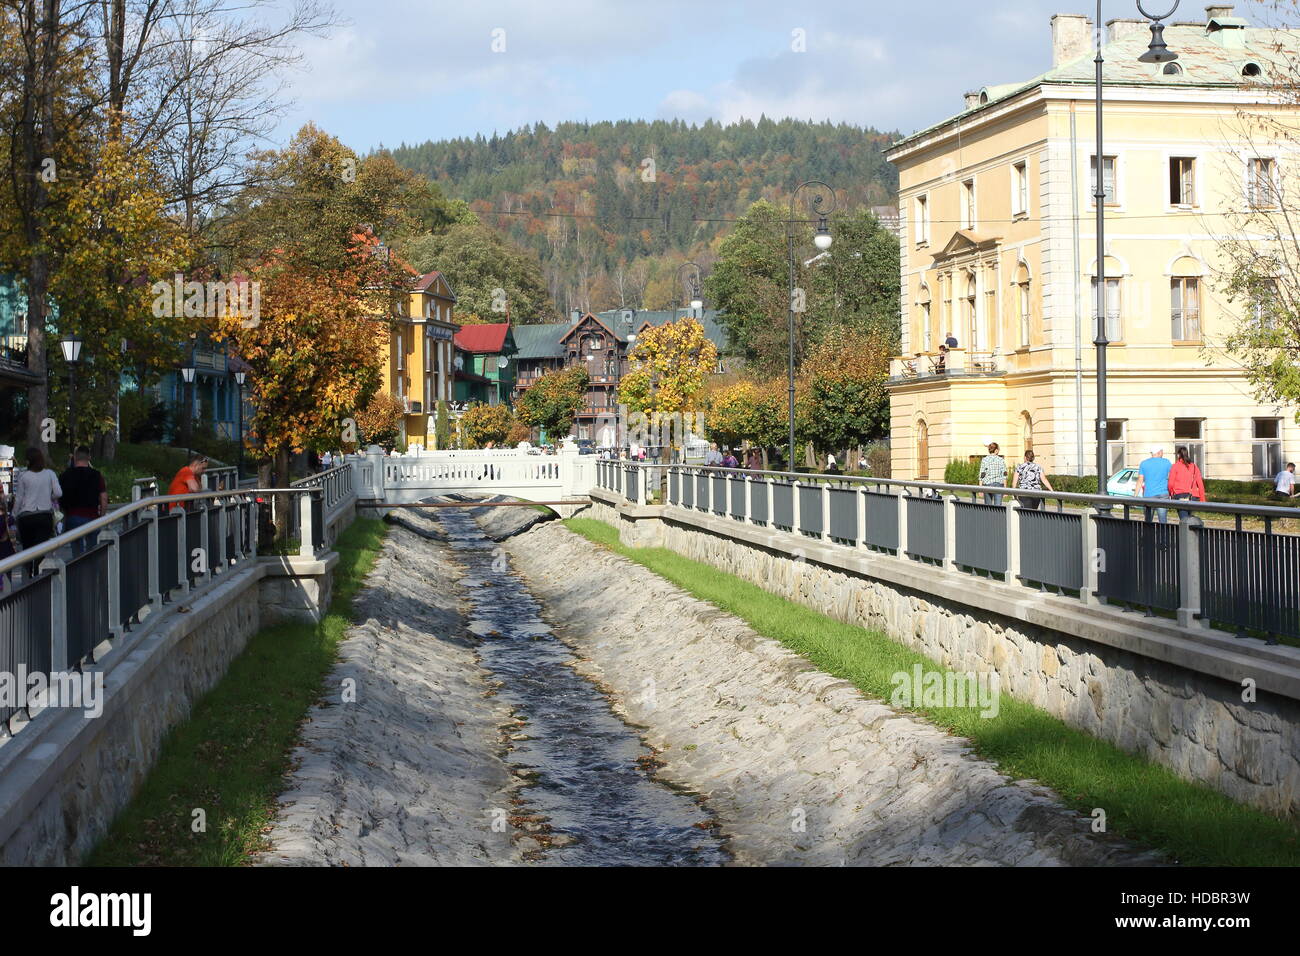 KRYNICA ZDROJ, POLAND - OCTOBER 13, 2016. River in Historic city center of Krynica Zdroj. Stock Photo